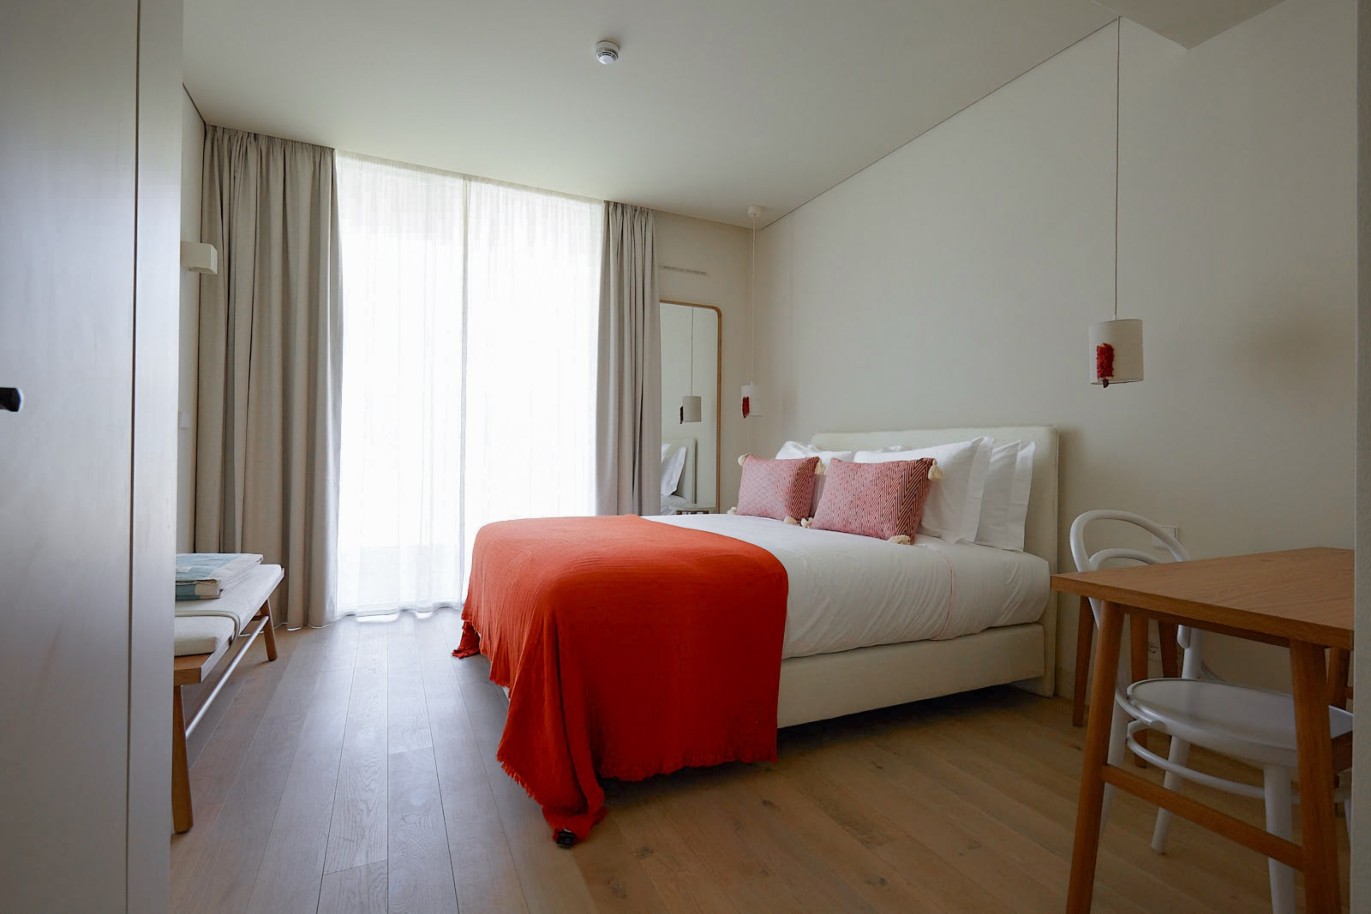 2 bedroom apartment in resort, for sale in Porches, Algarve_229109